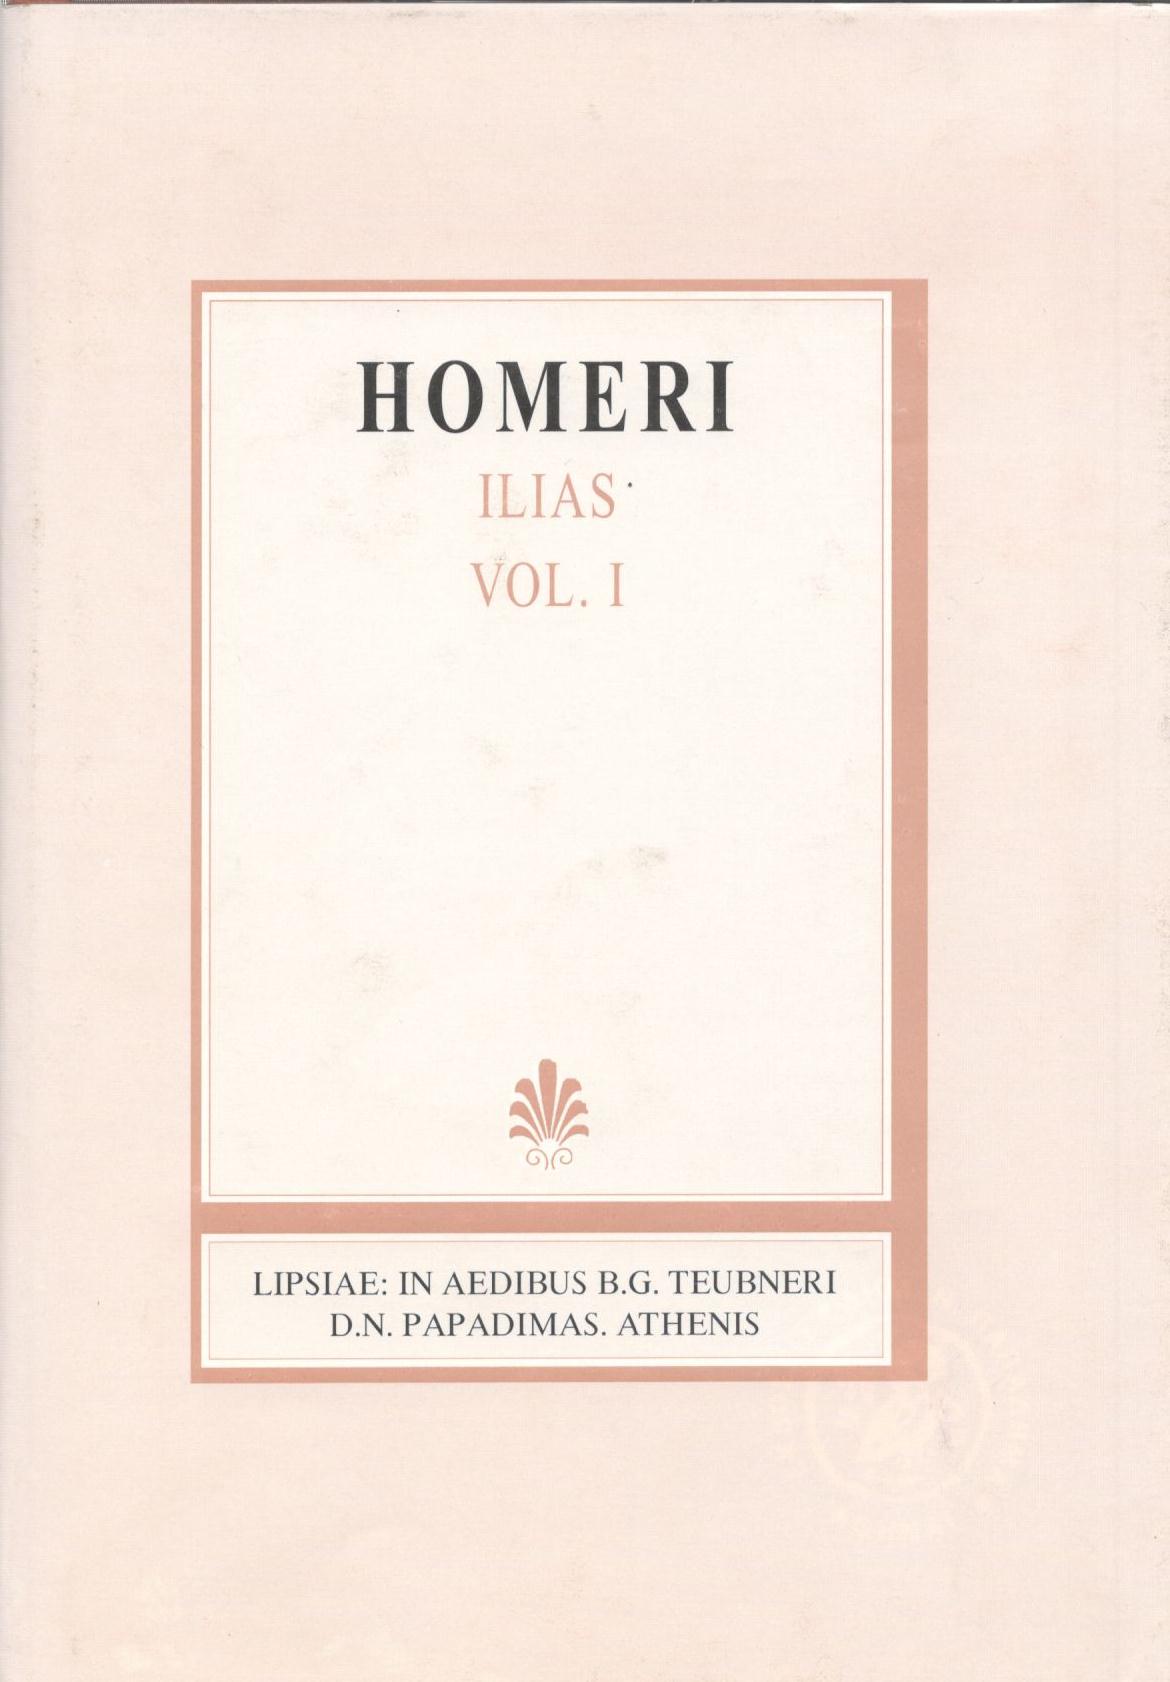 Homeri, Ilias, Vol. I, [Ομήρου, Ιλιάς, Ραψωδίαι Α-Μ, τ. Α']